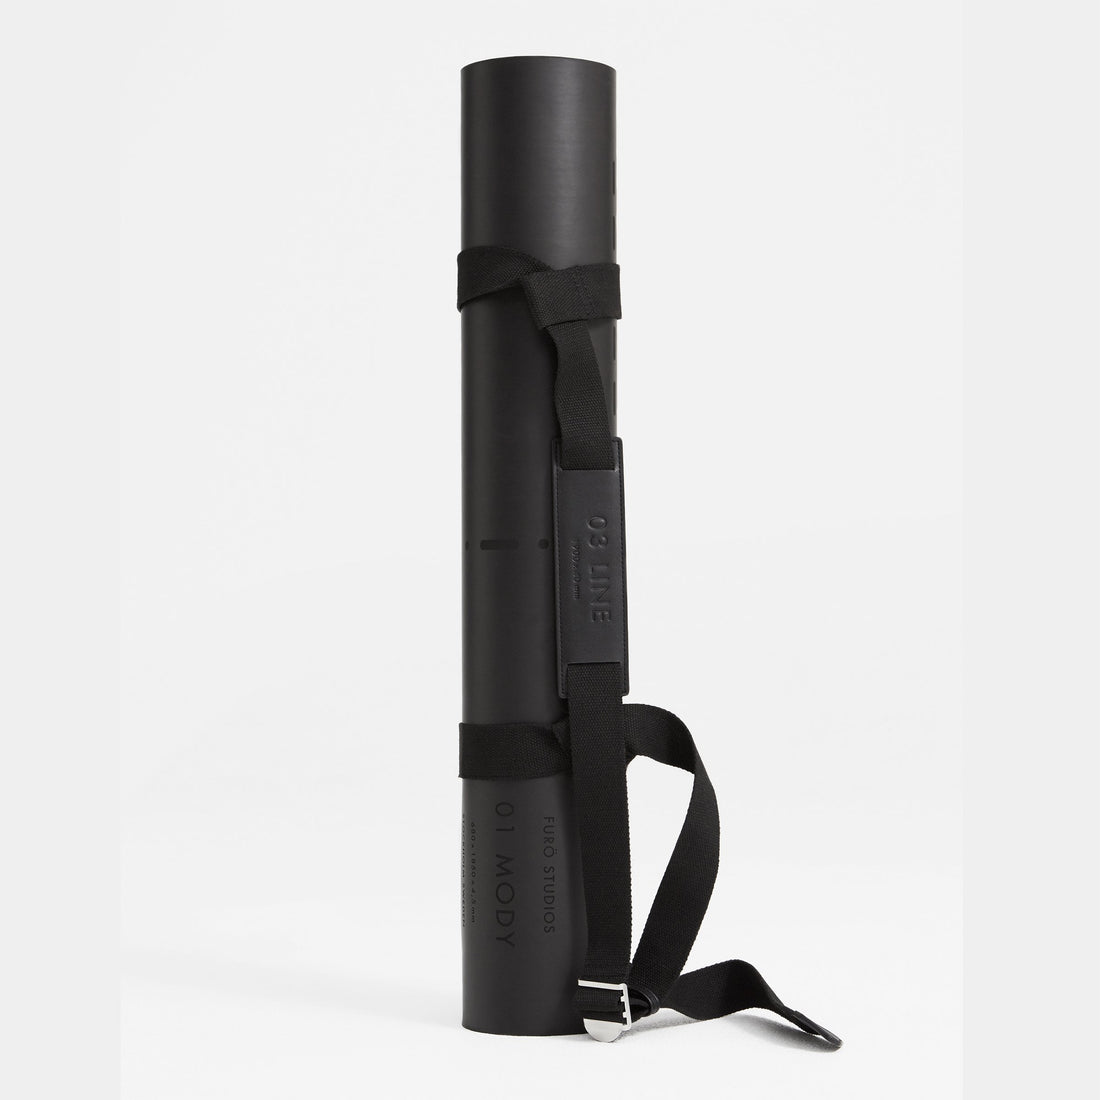 01 LINE - supreme adjustable yoga mat carrying strap with black design yoga mat - Furö Studios redefining yoga